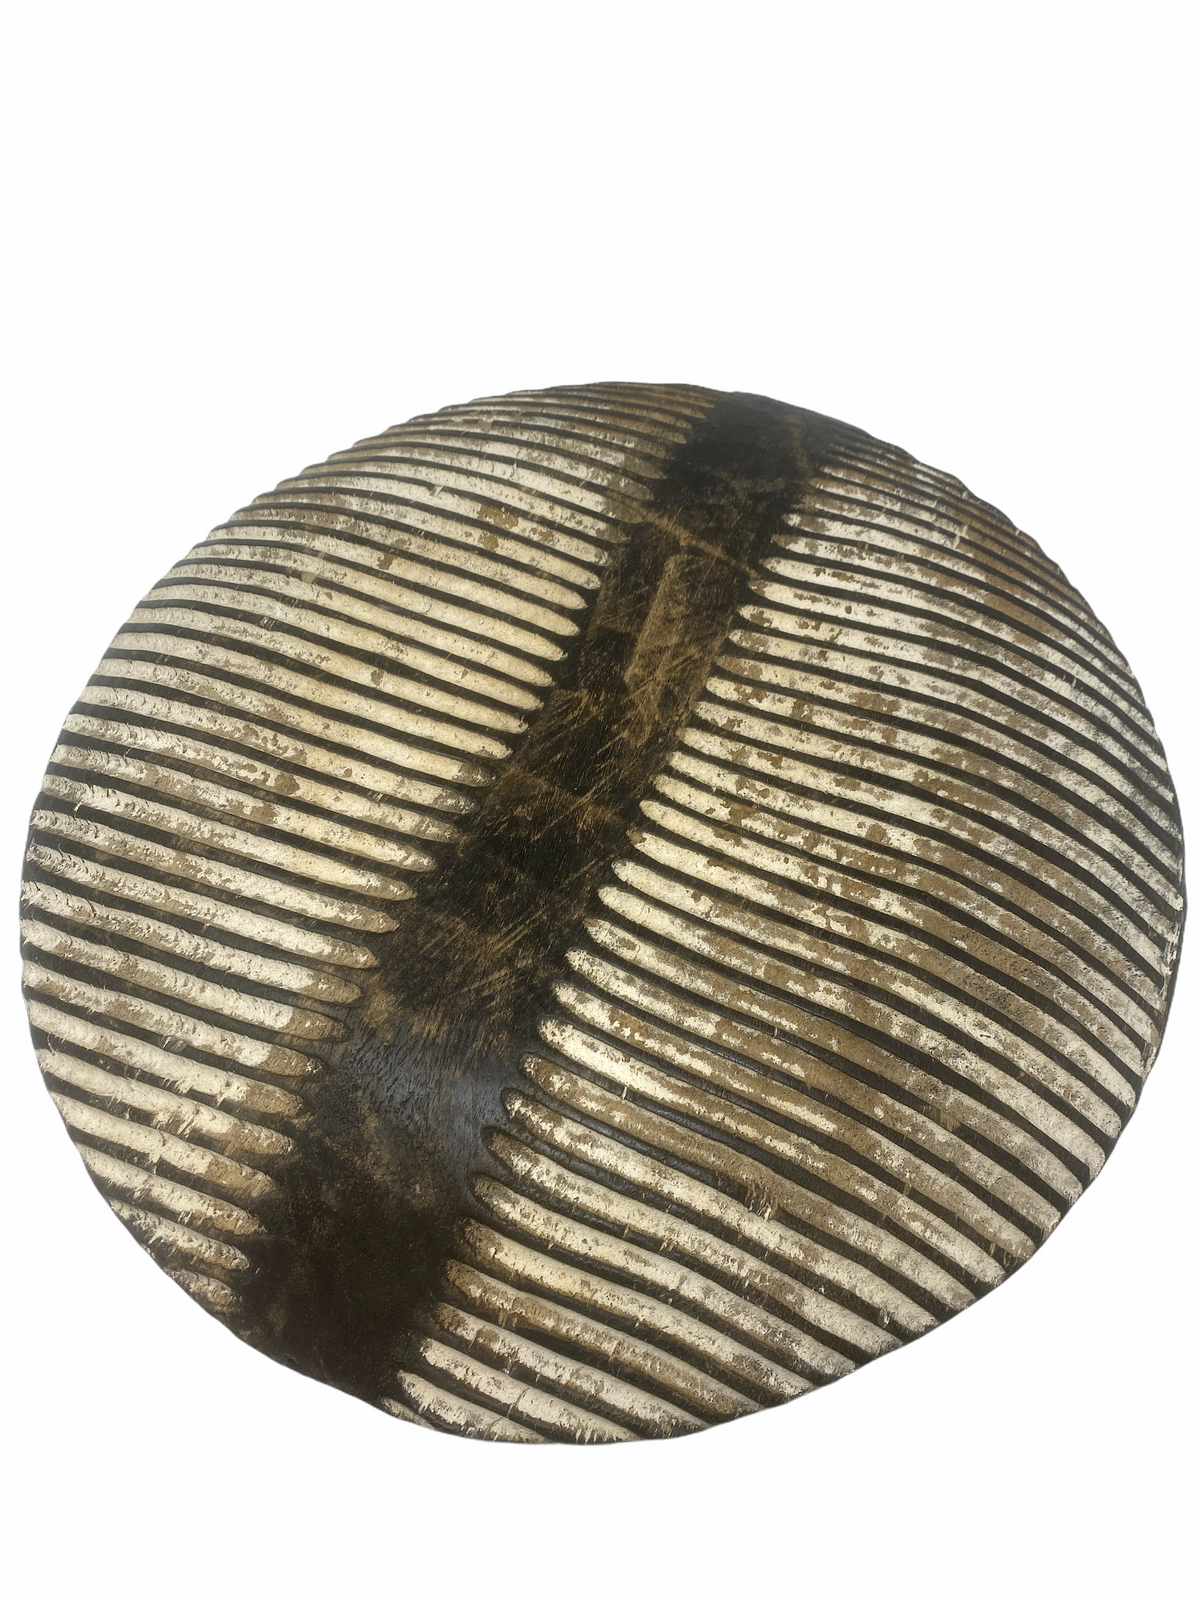 Cameroon Shield -L - 53cm